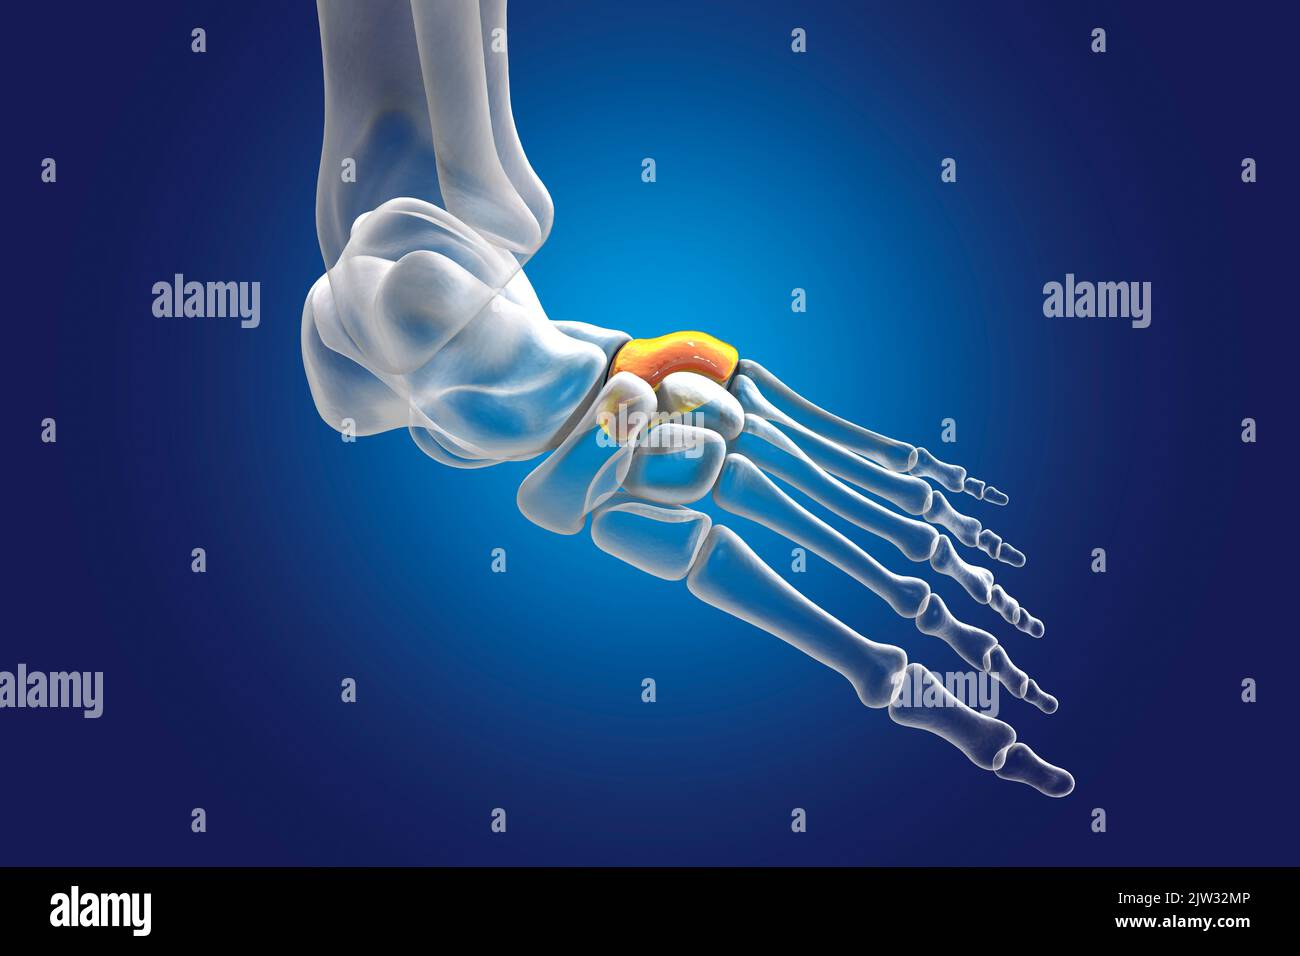 Cuboid bone of the foot, illustration. Stock Photo